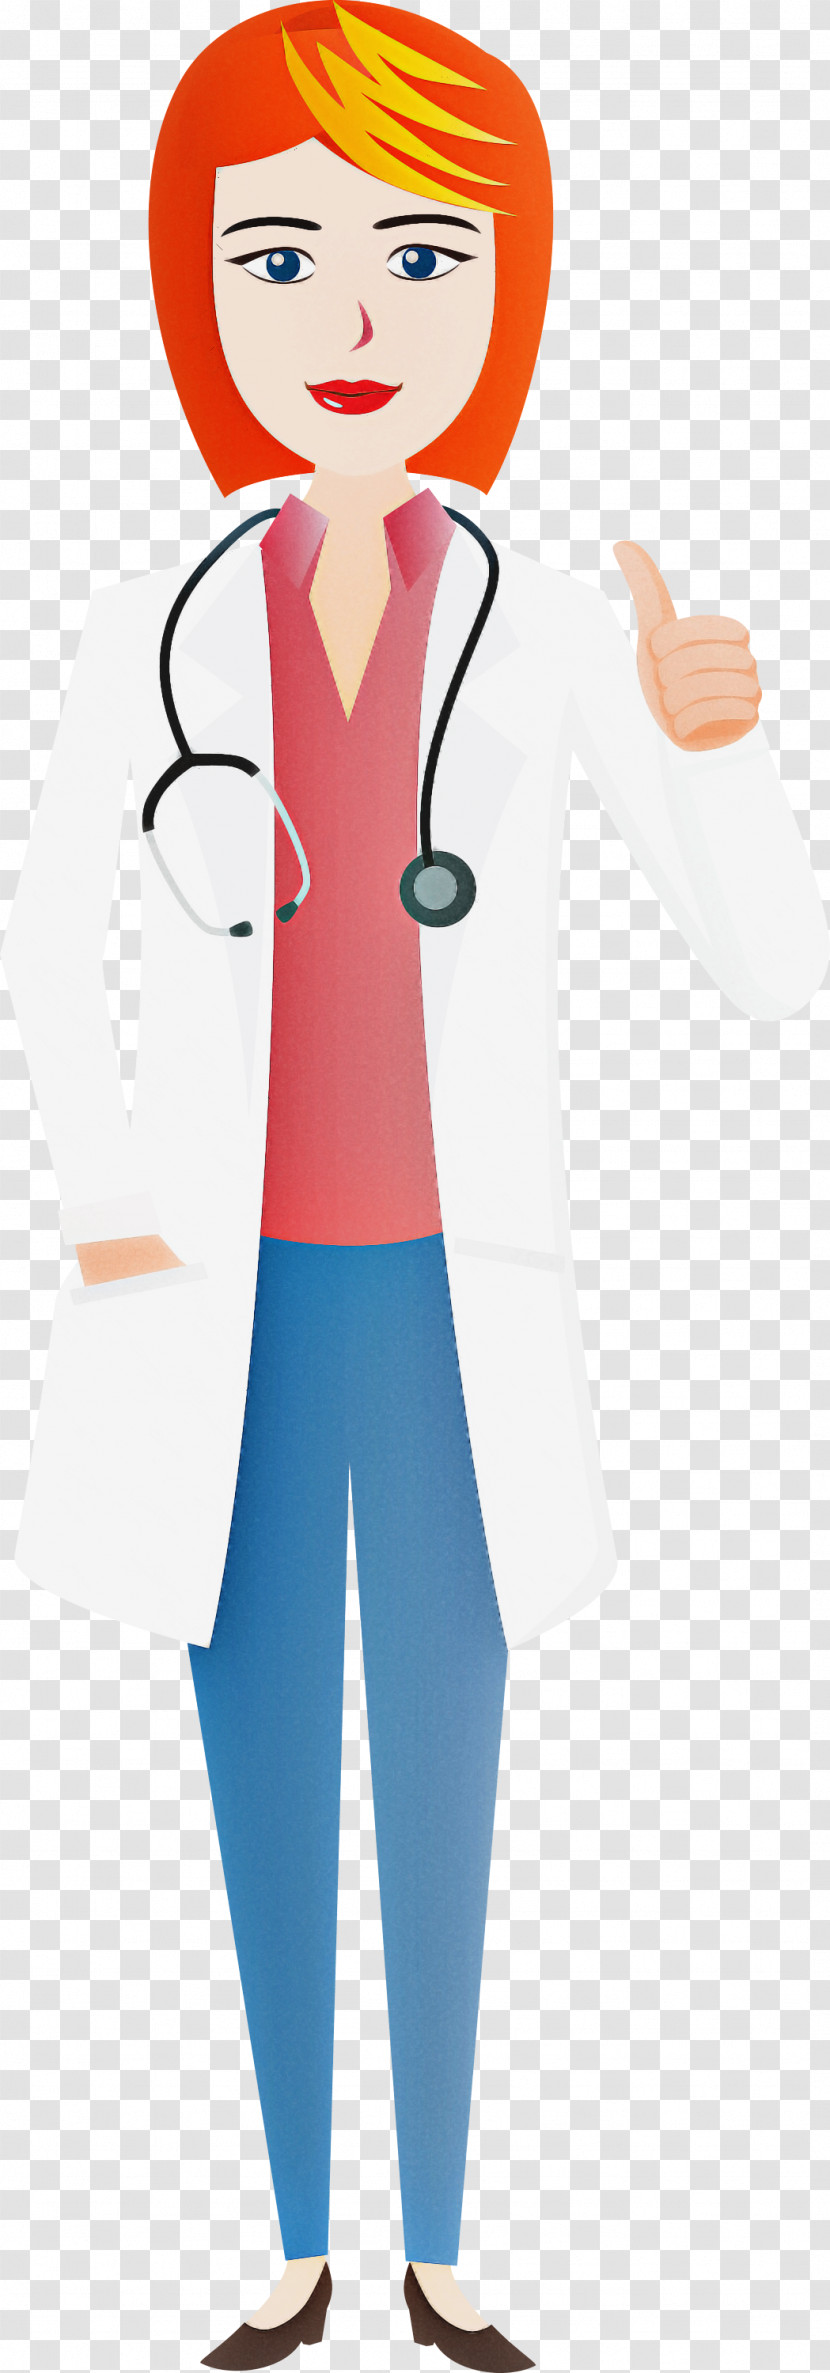 Stethoscope Transparent PNG